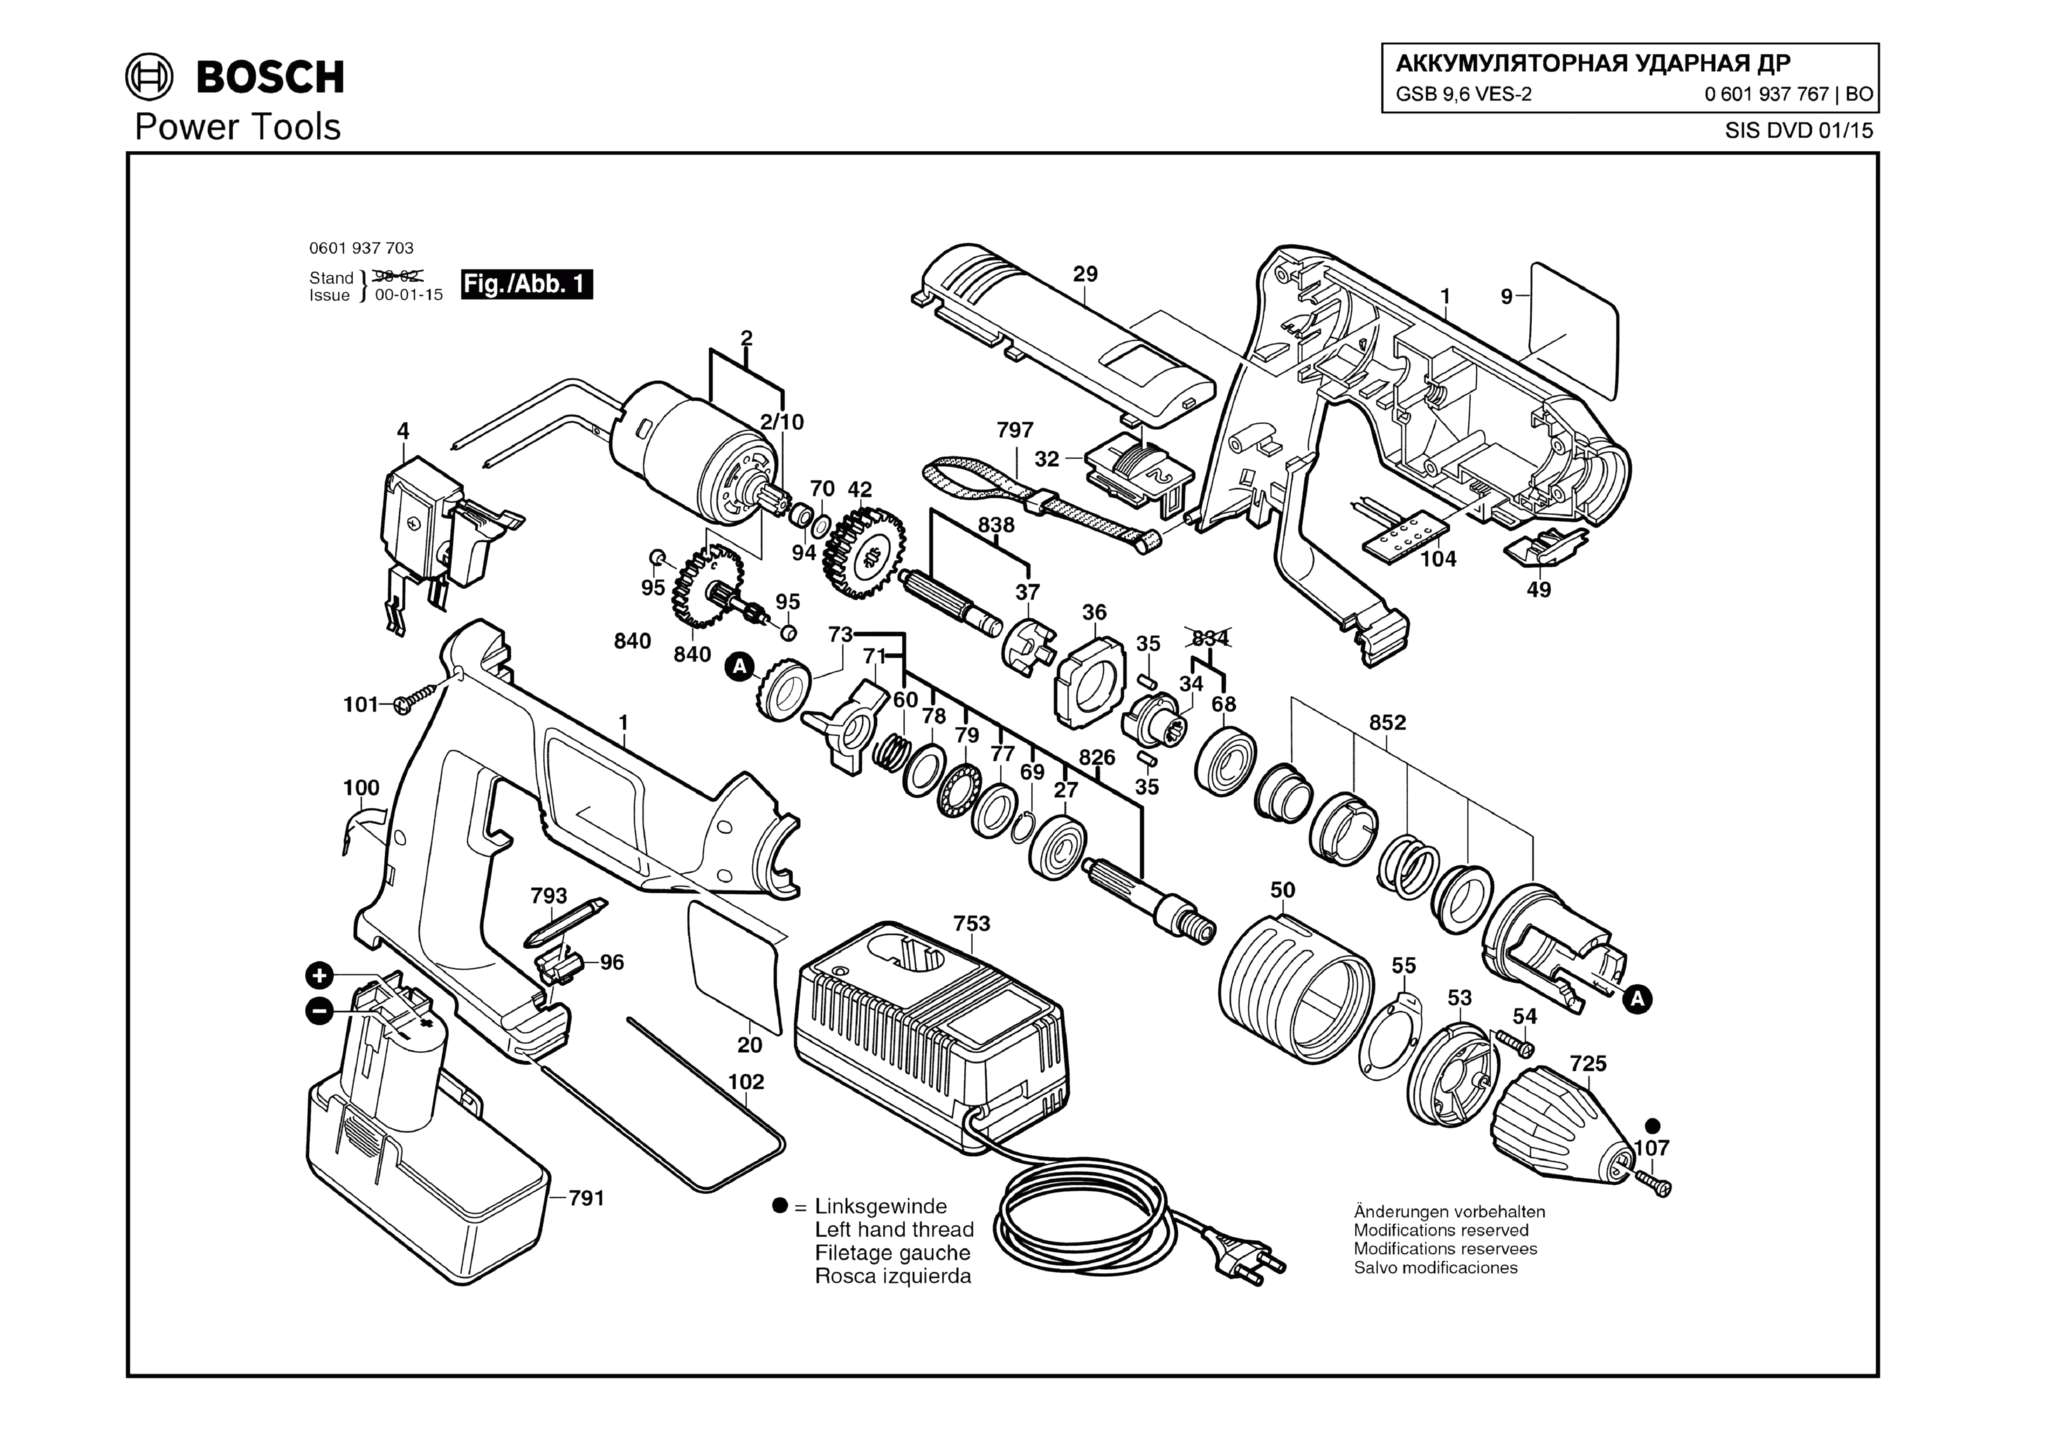 Запчасти, схема и деталировка Bosch GSB 9,6 VES-2 (ТИП 0601937767)